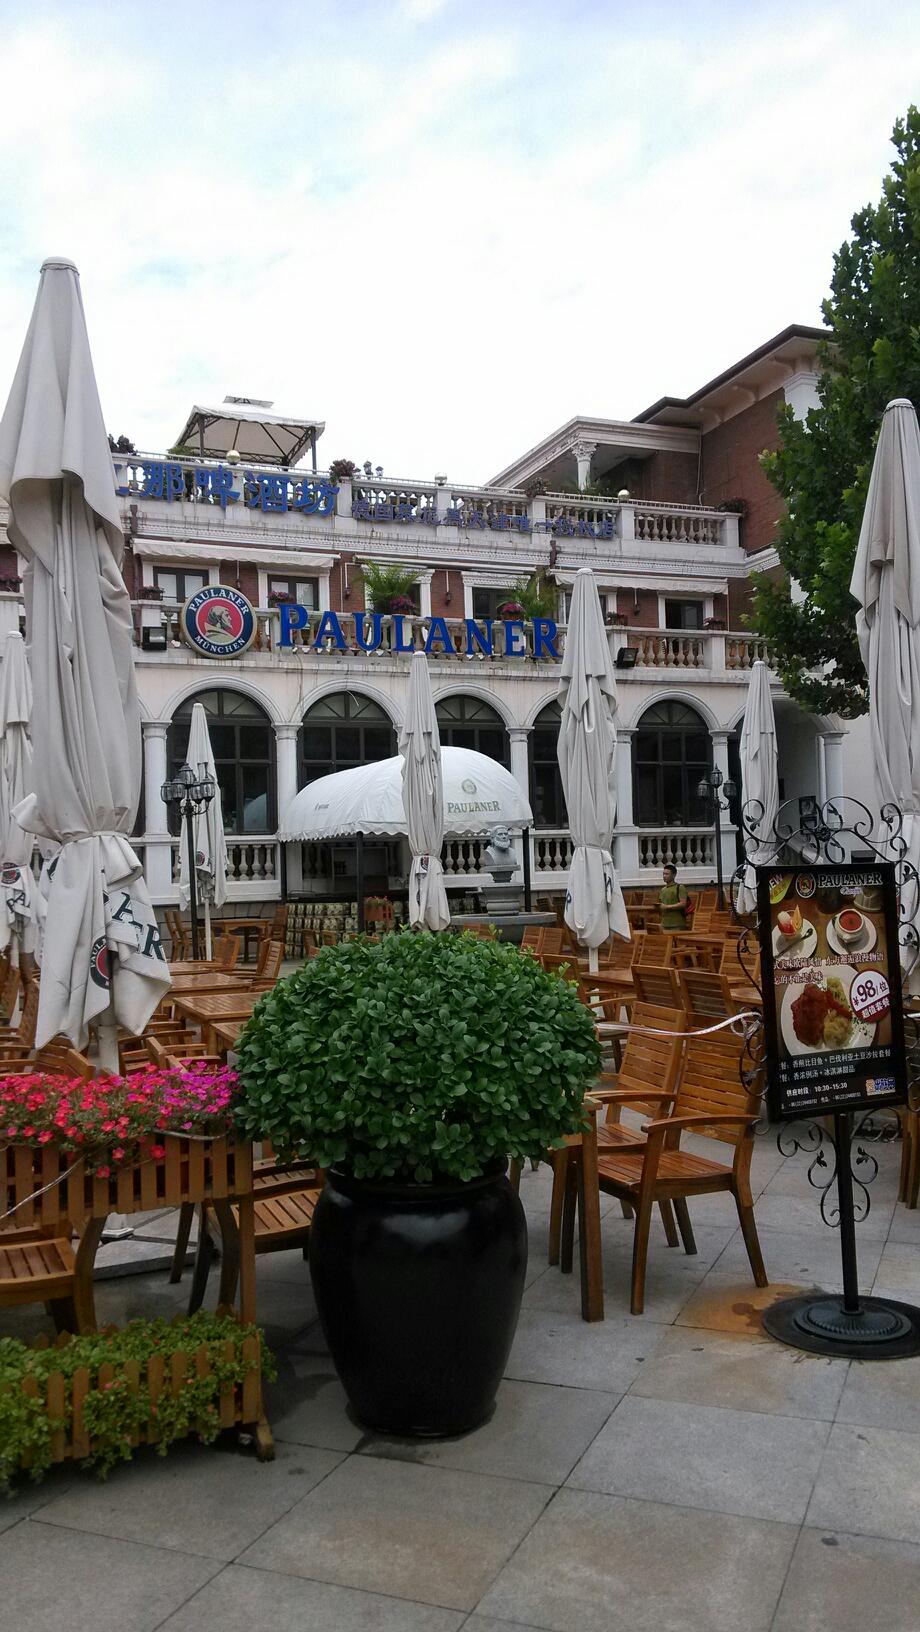 天津paulaner餐厅图片